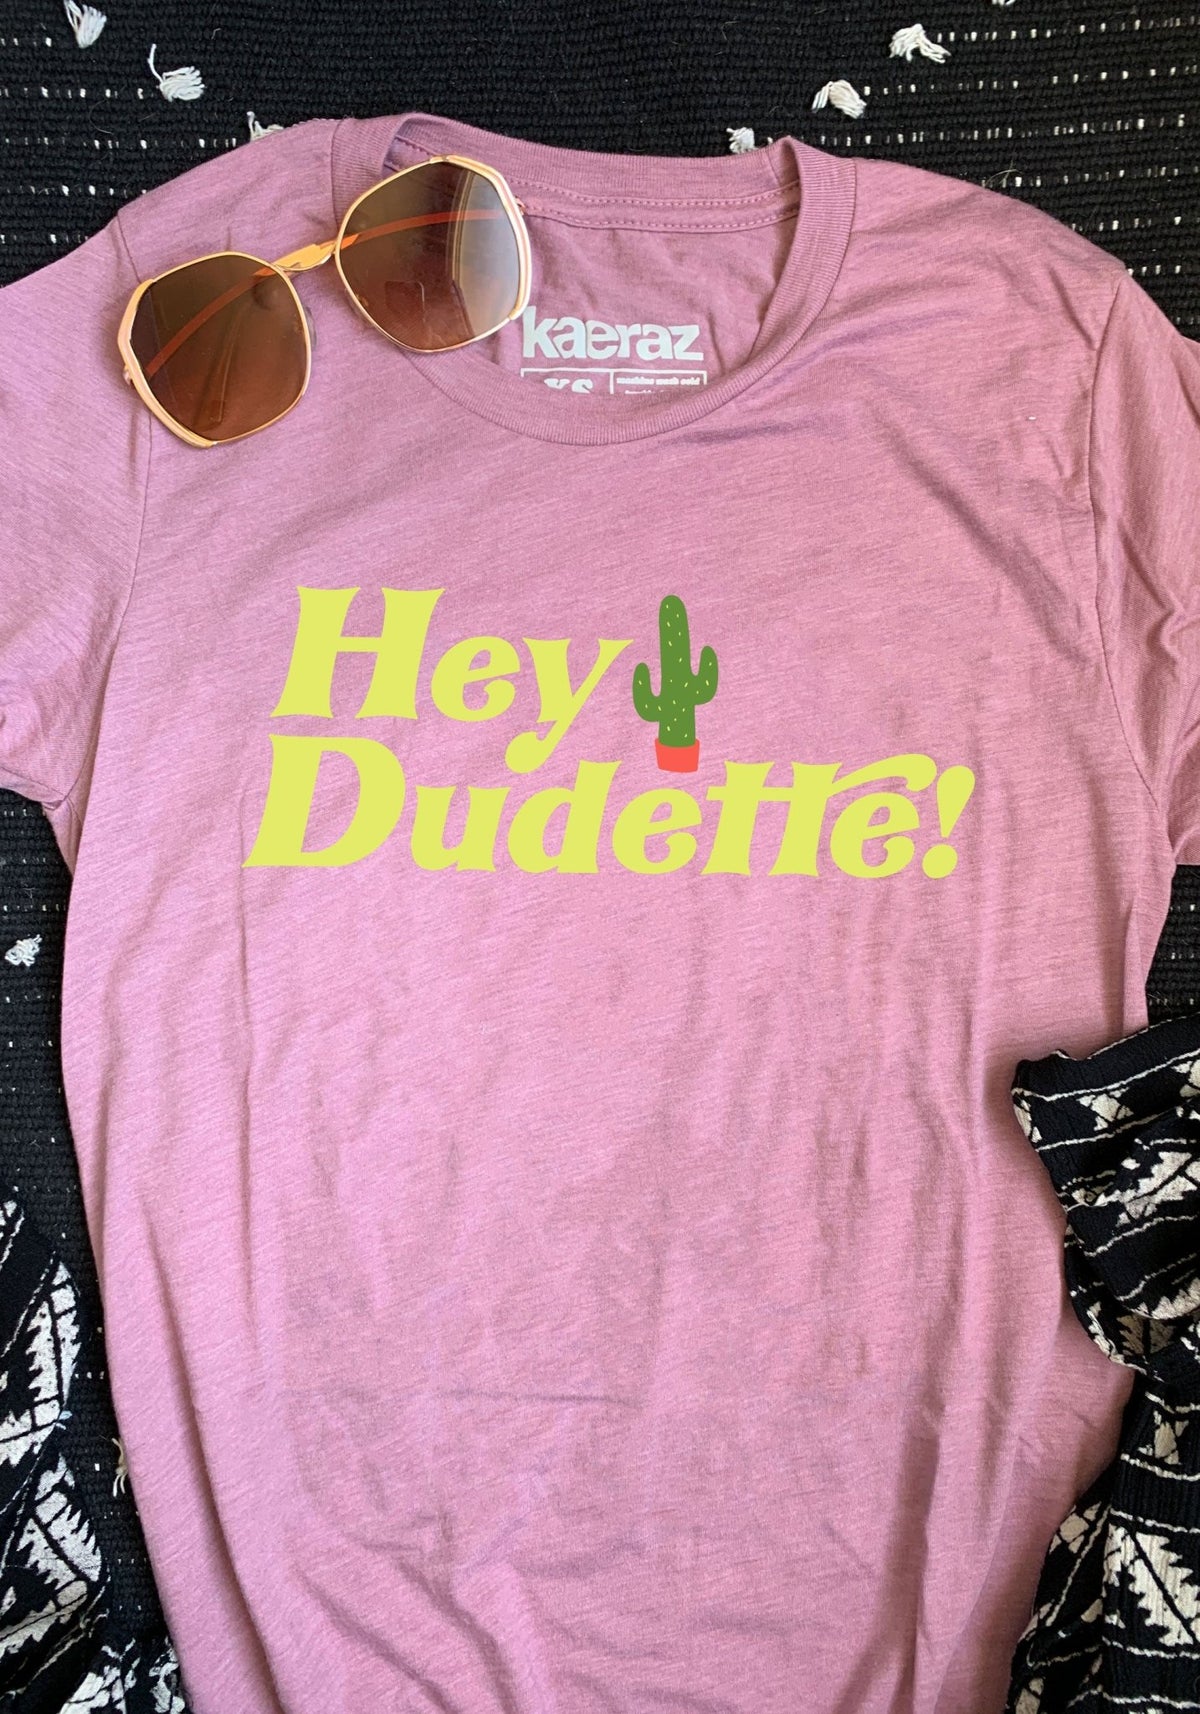 Hey Dudette Tee by kaeraz cactus cowgirl desert